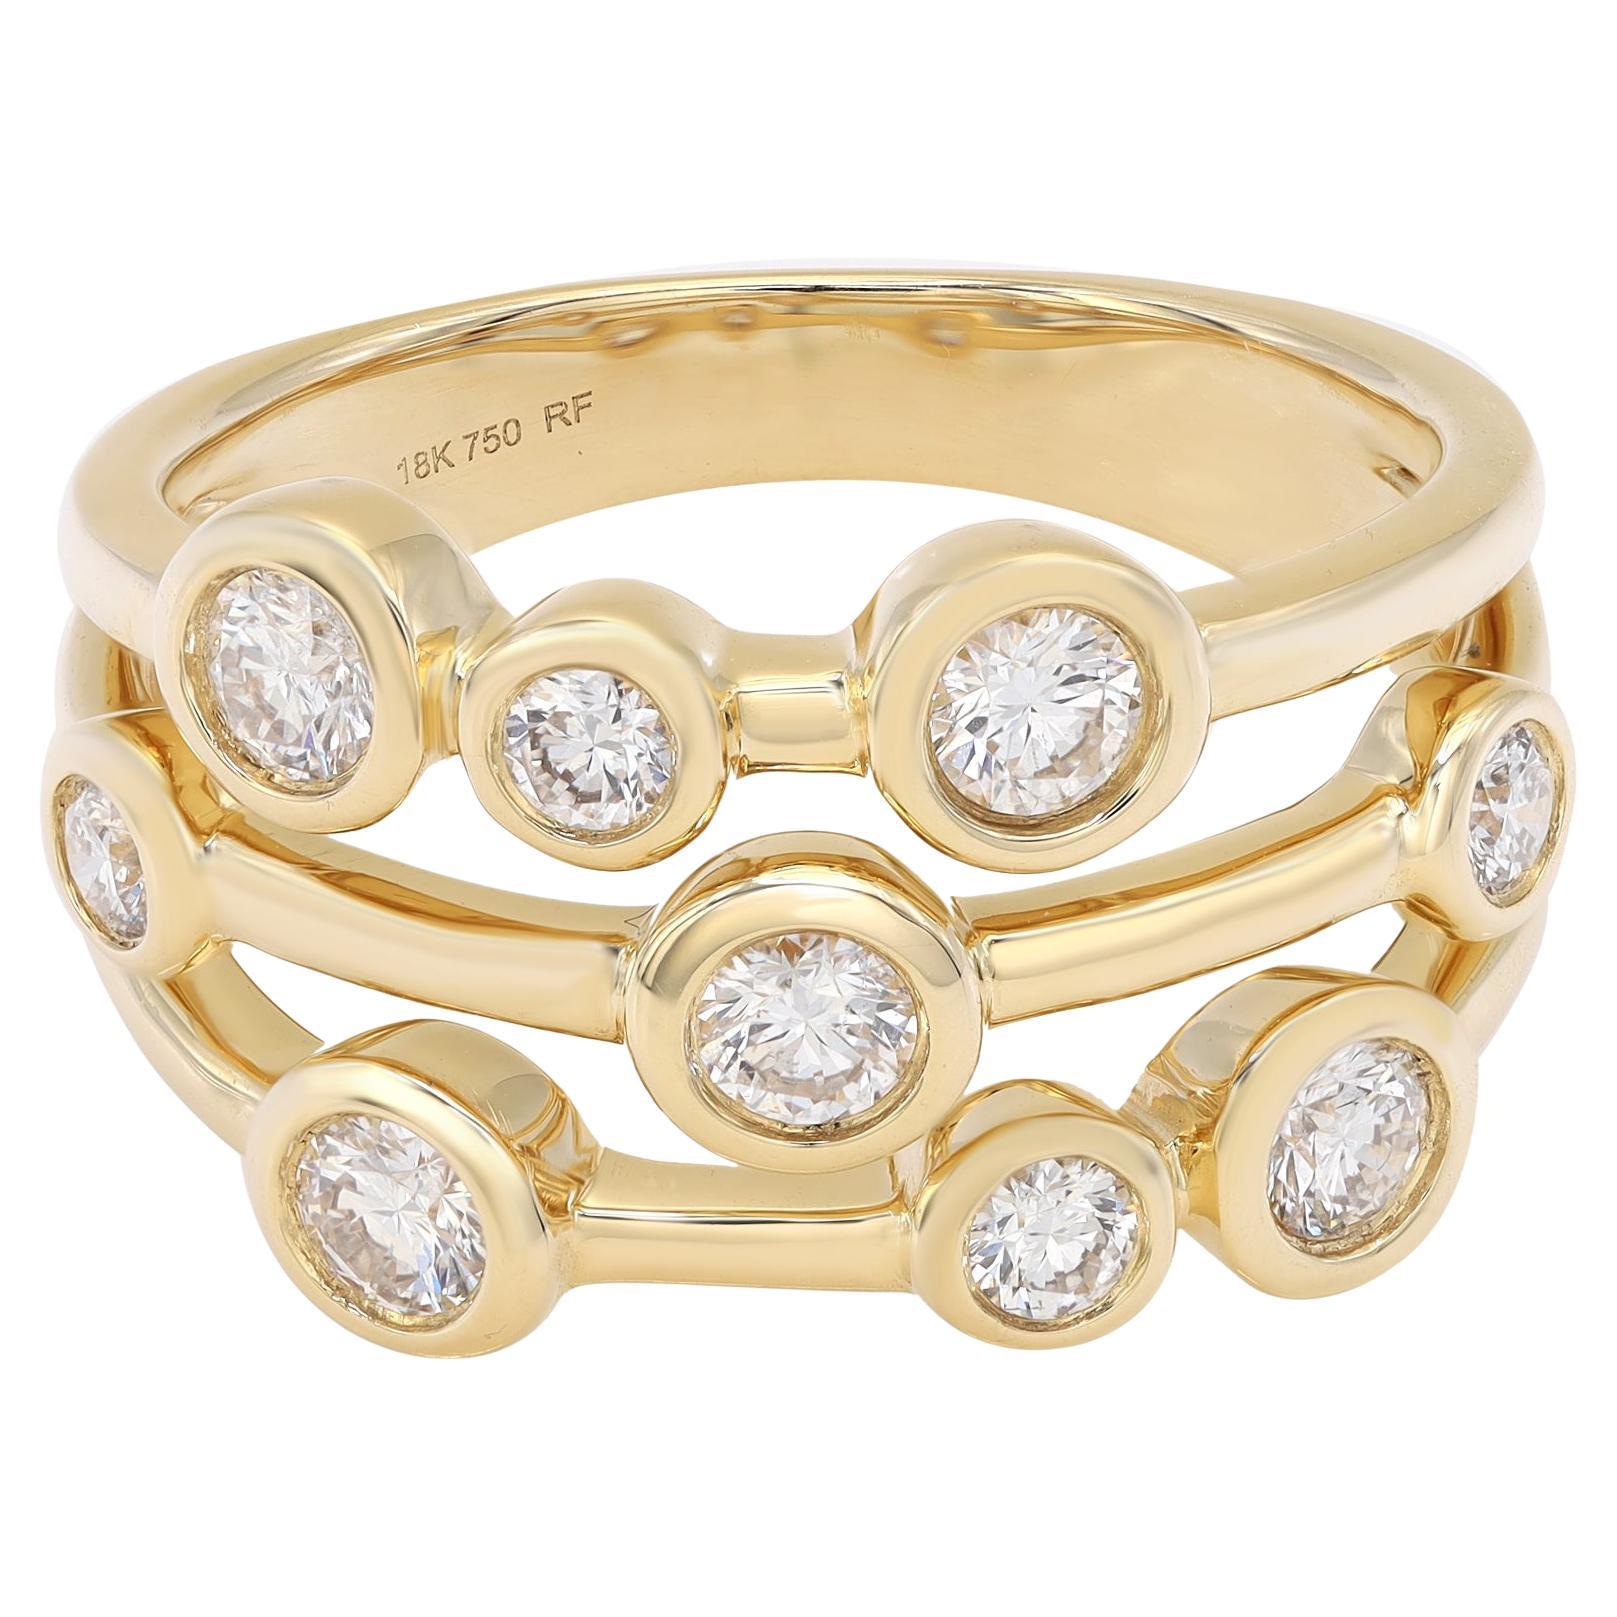 Bezel Set Round Cut Diamond Fancy Ring 18K Yellow Gold 0.69Cttw Size 6.75 For Sale